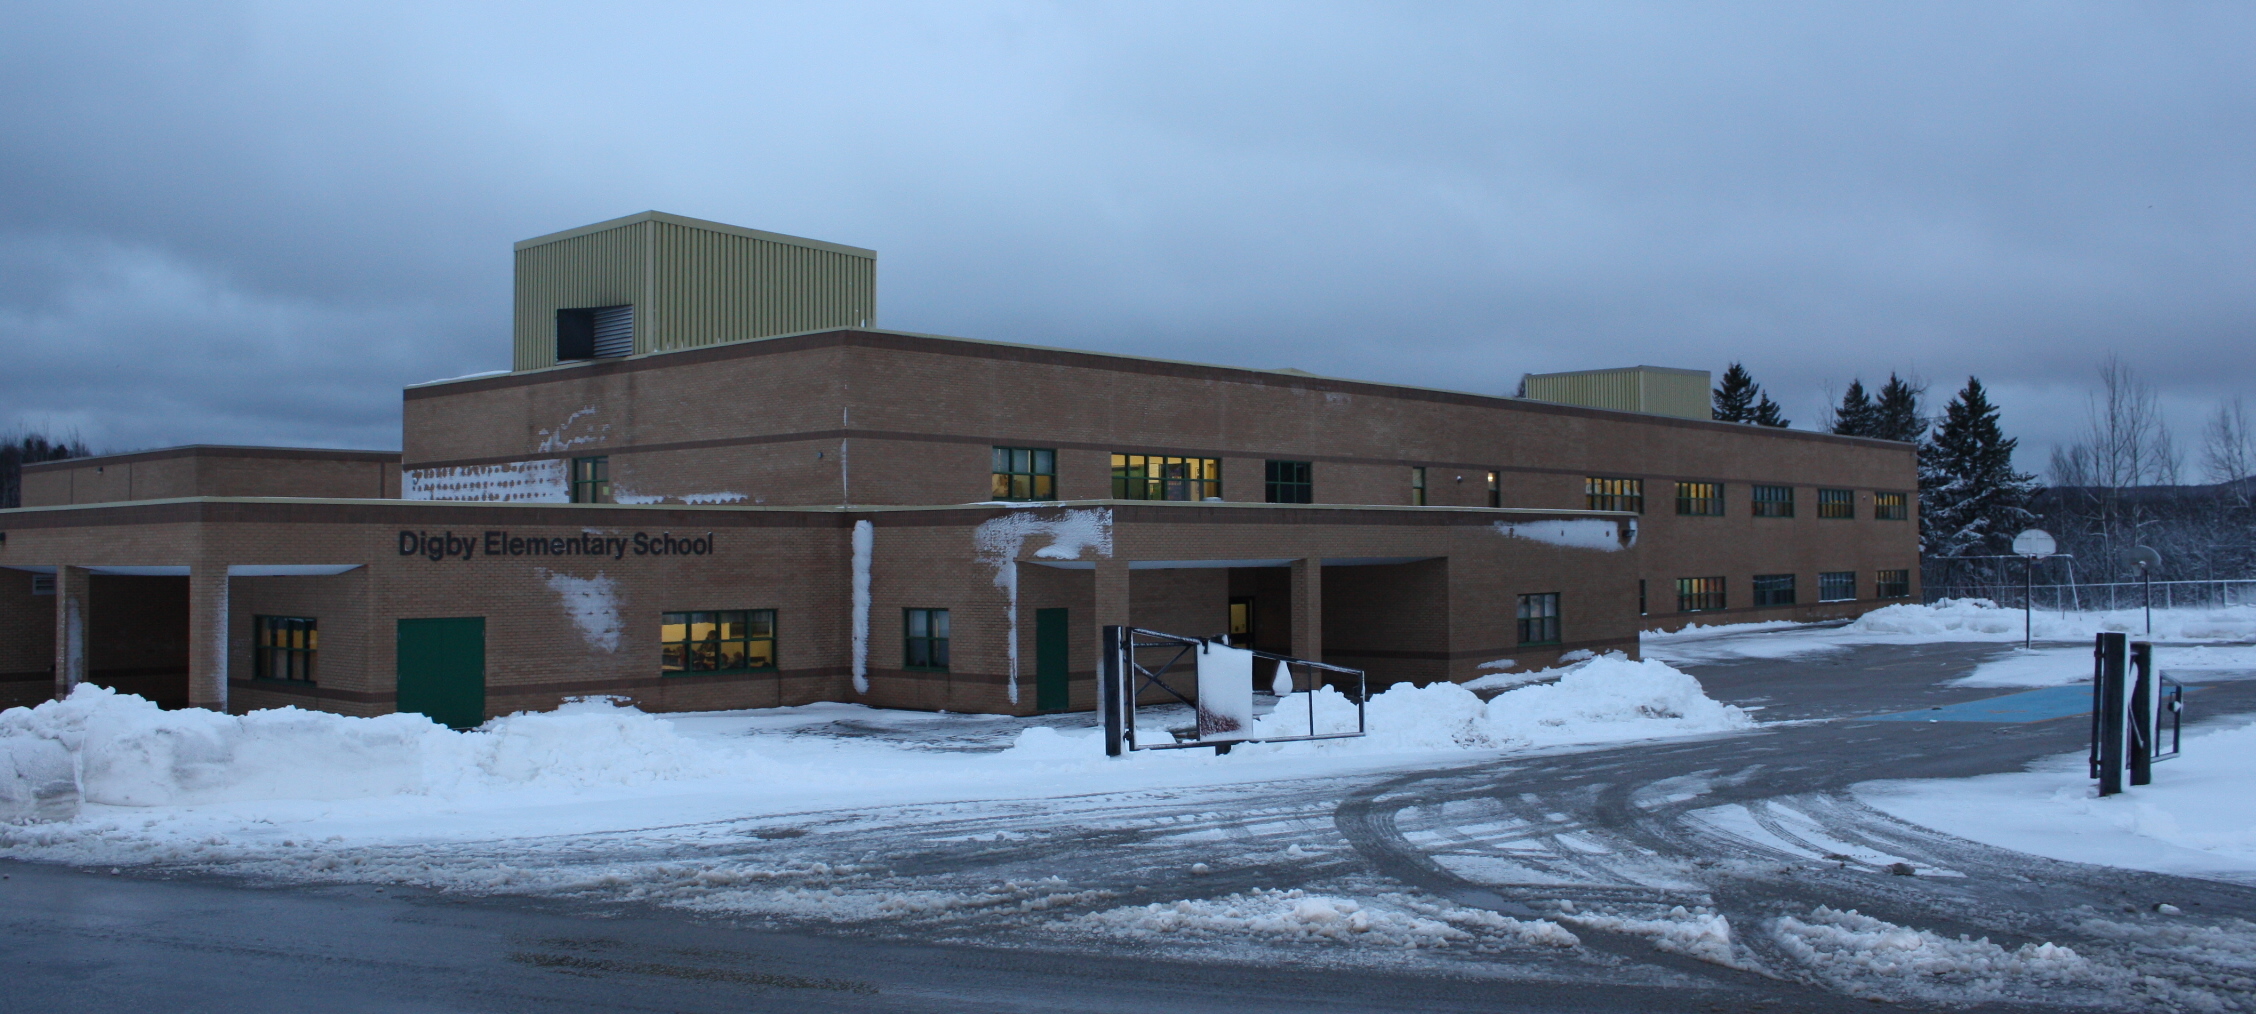 Digby Elementary School - Schools! around Canada Wiki